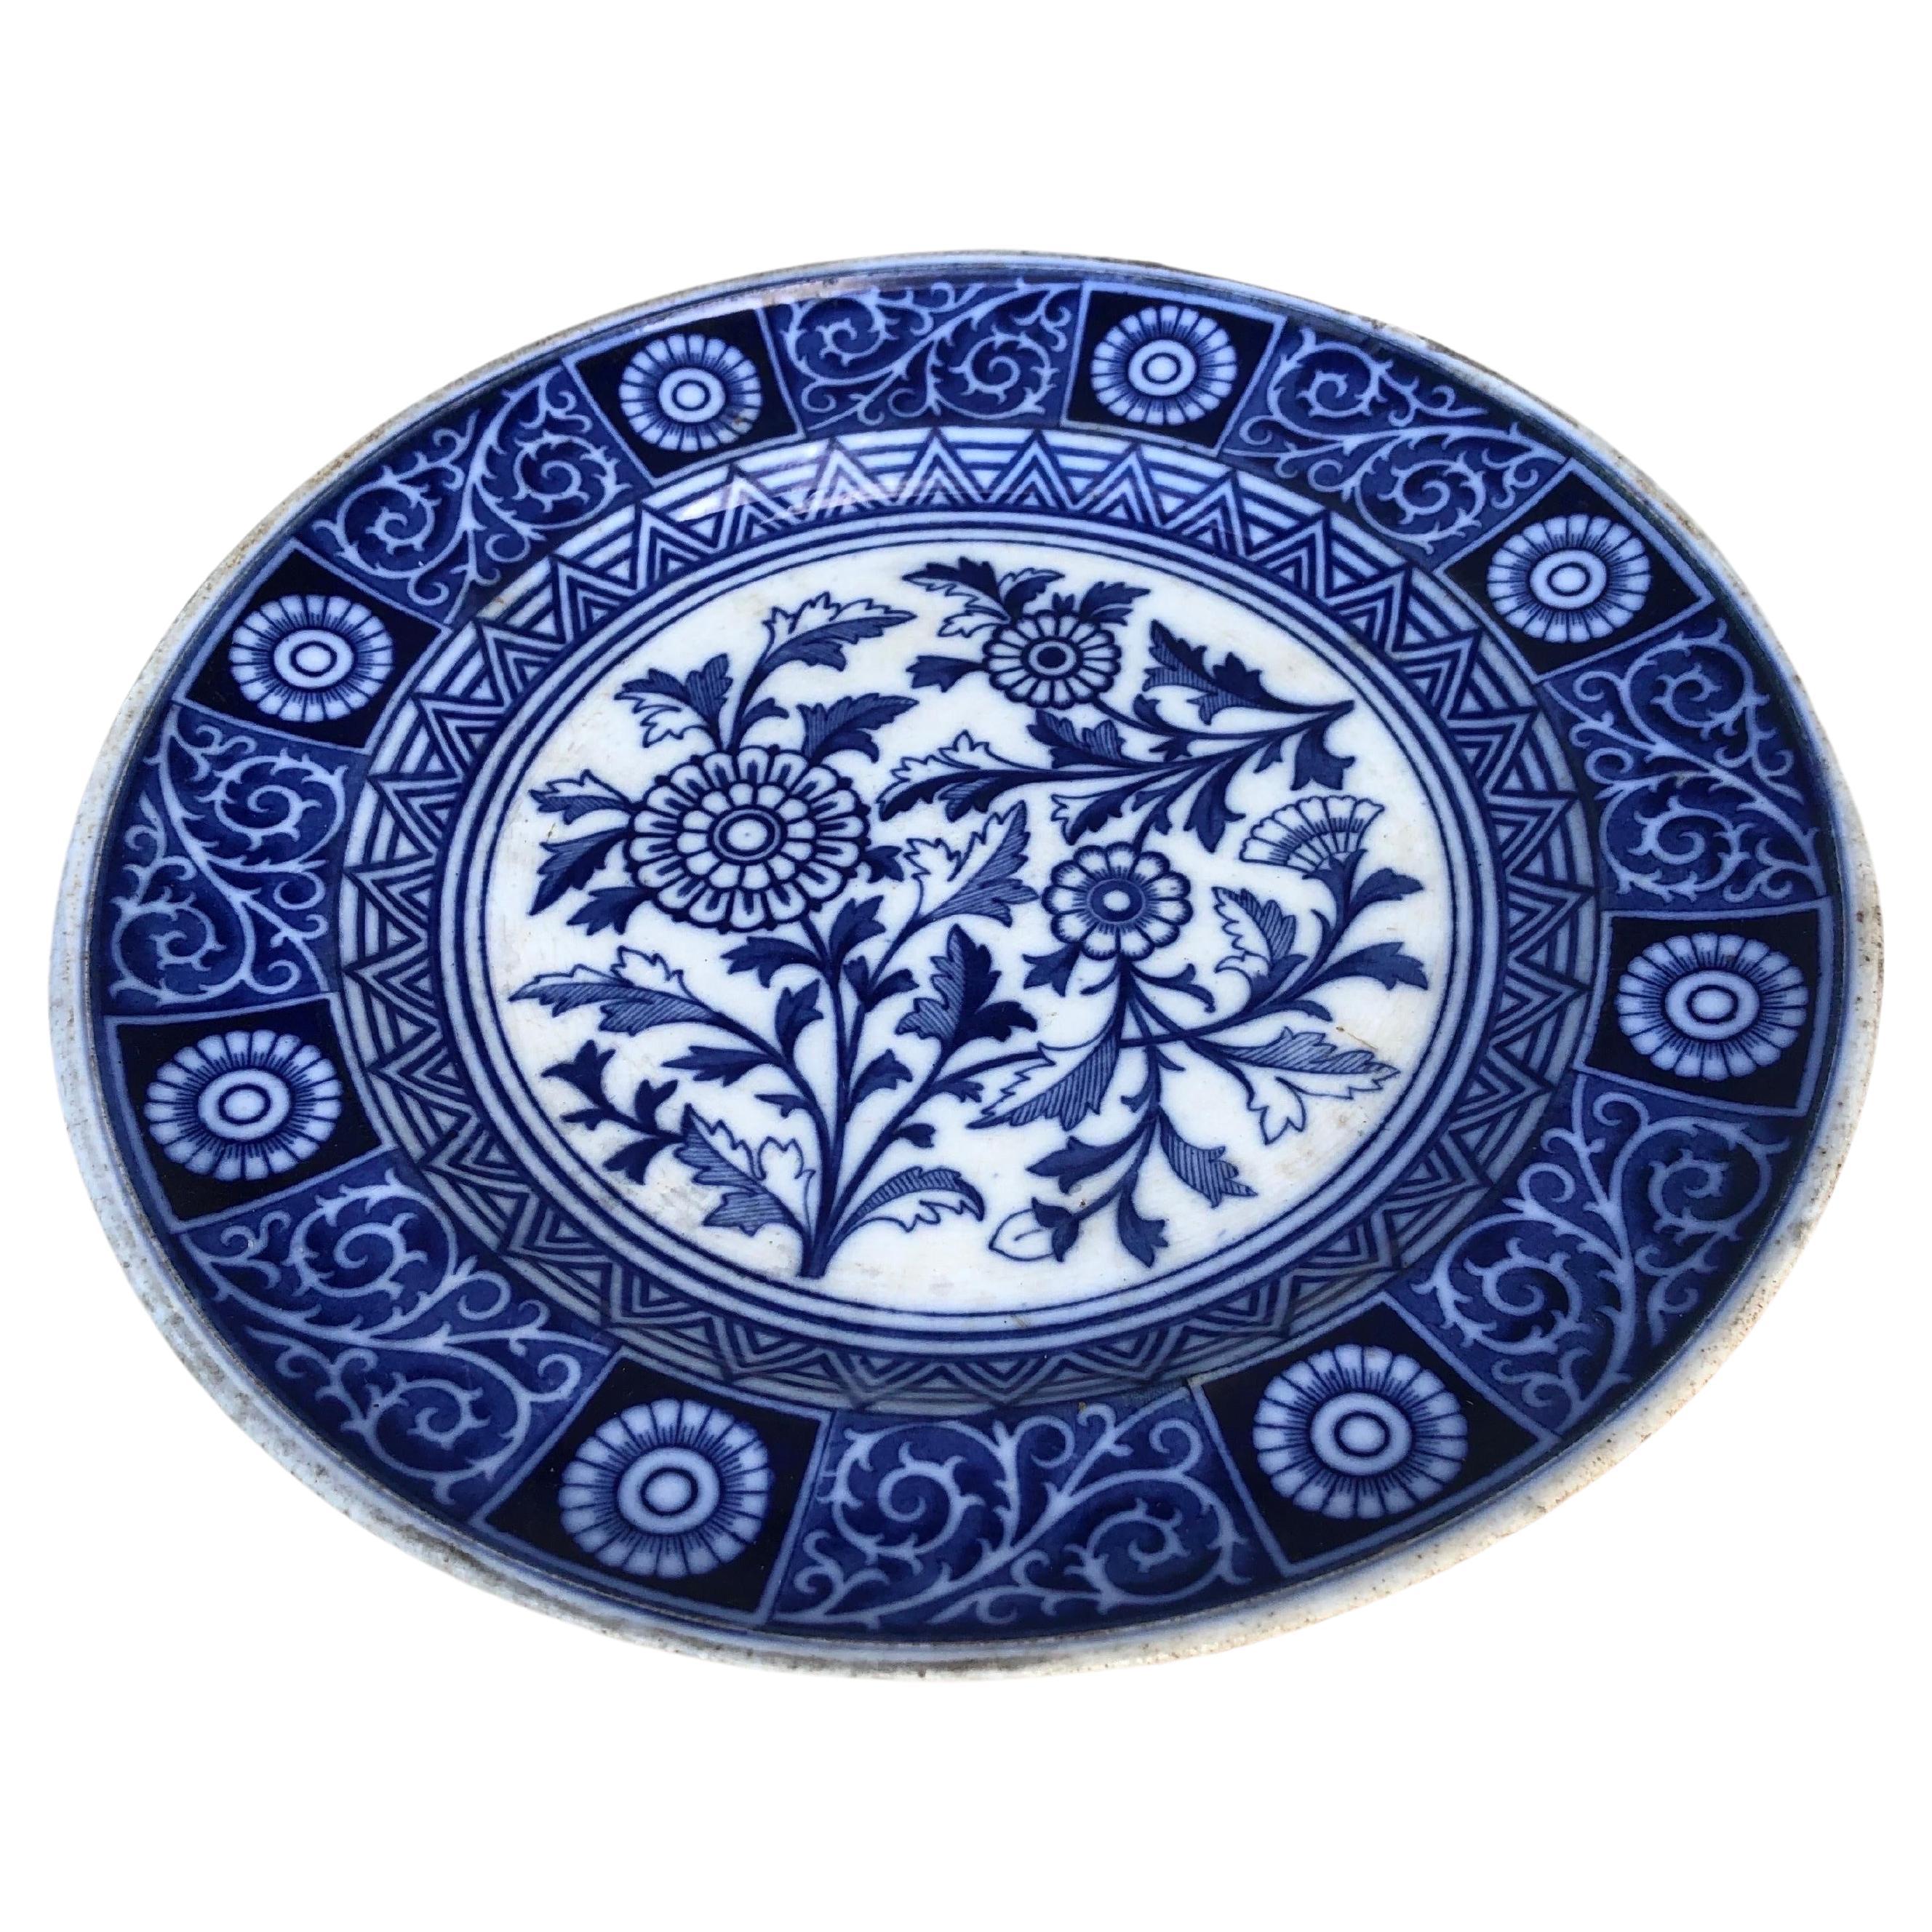 19th century blue & white daisy platter signed Minton.